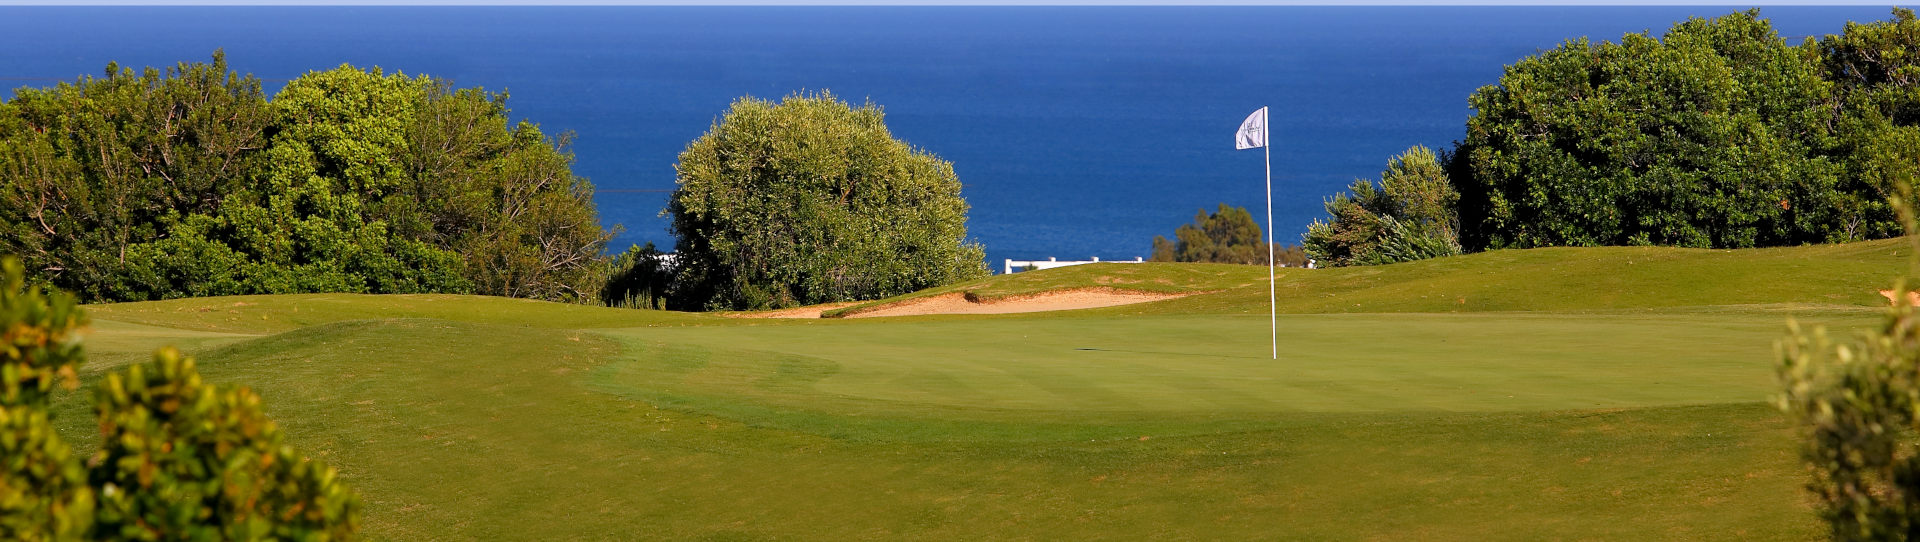 Spain golf courses - Valle Romano Golf - Photo 1